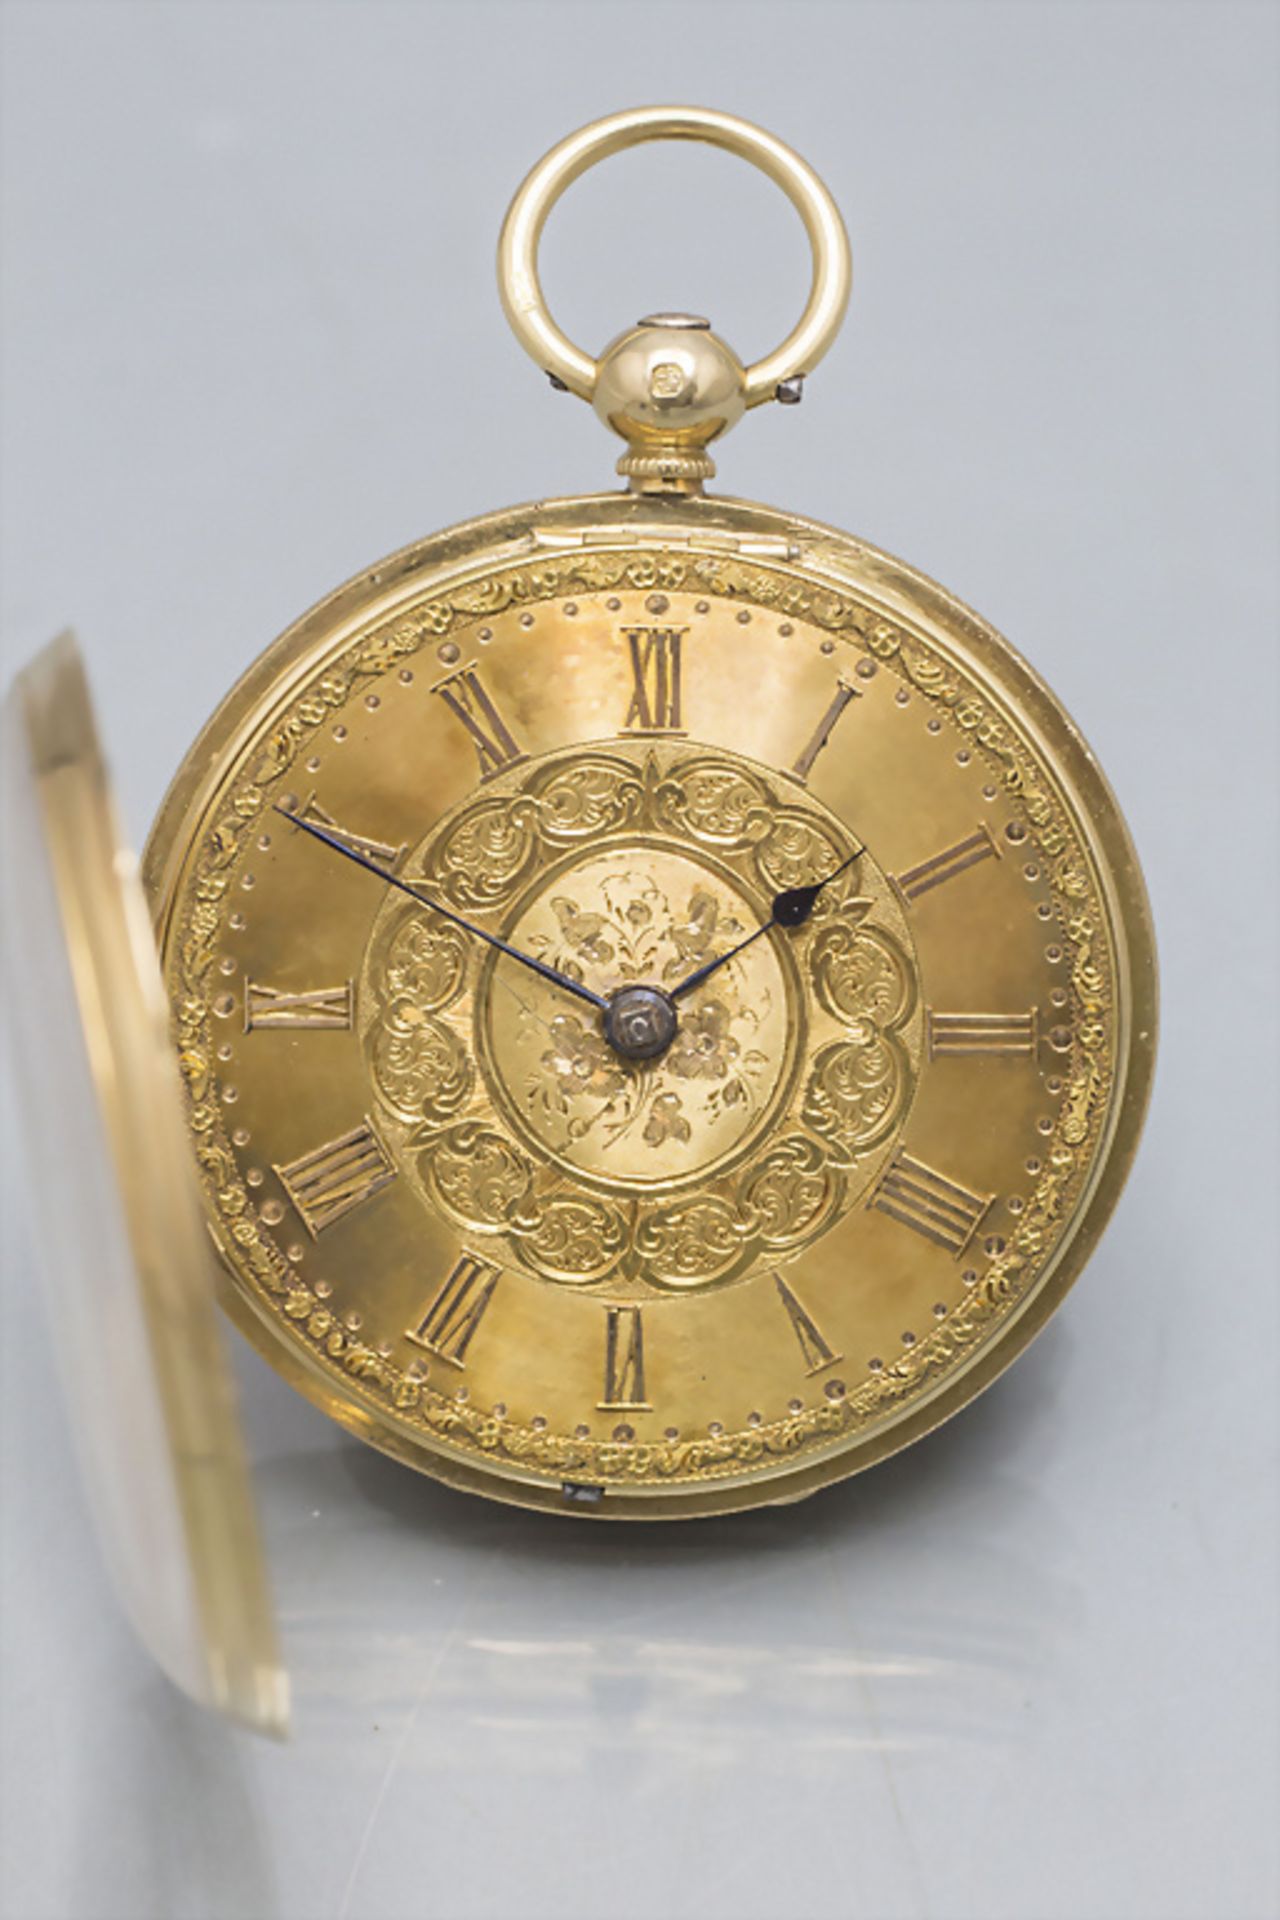 Offene Taschenuhr / An 18 ct gold open face pocket watch, England, um 1900 - Image 2 of 8